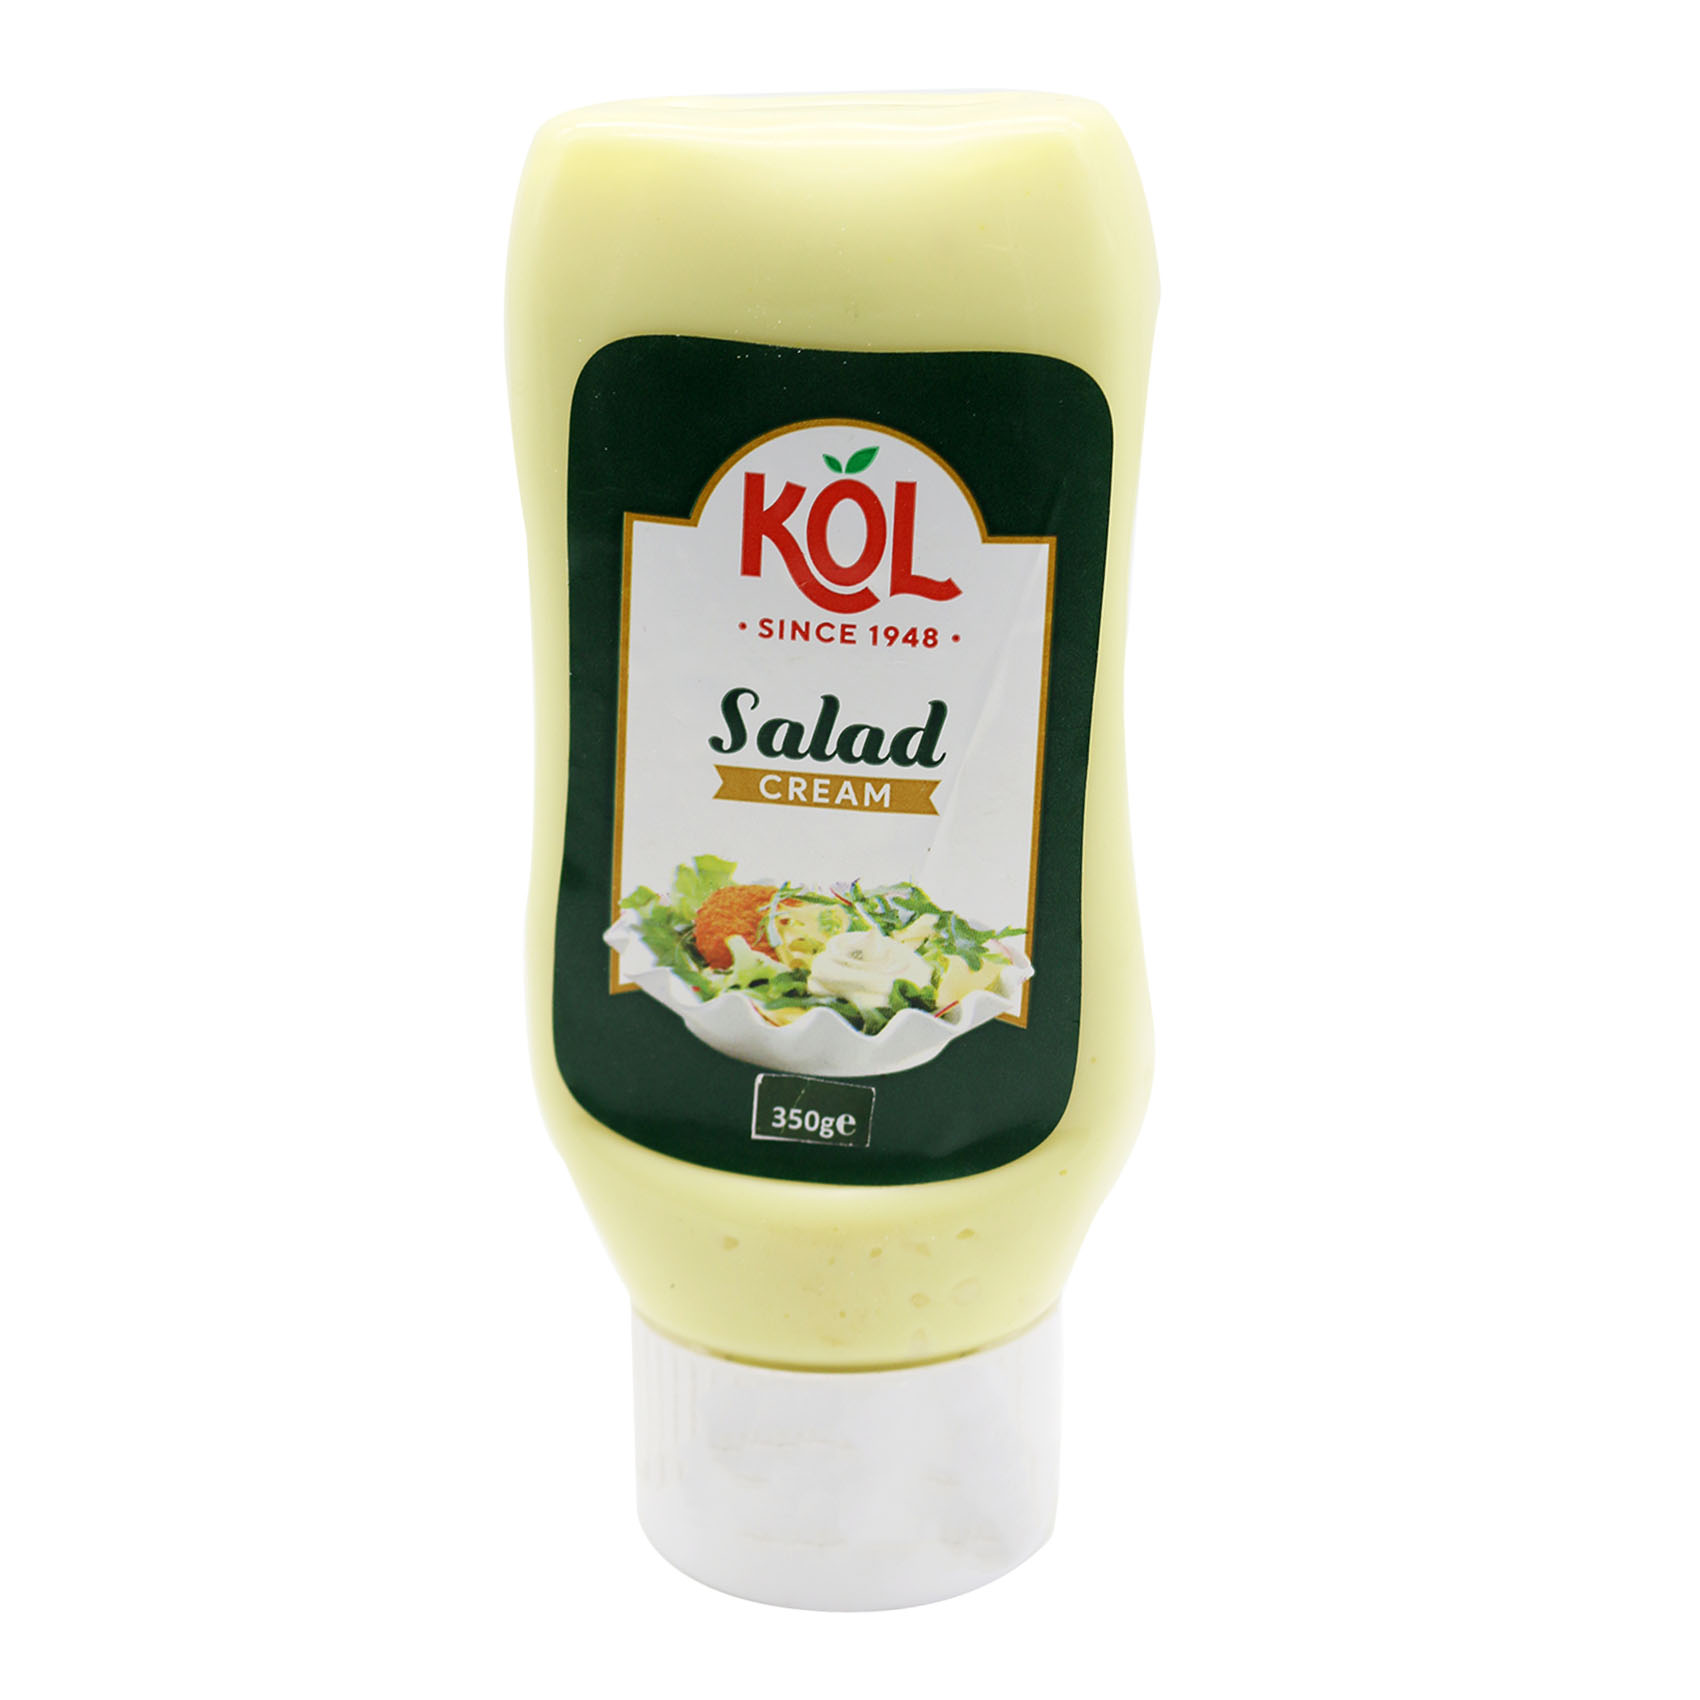 Kol Salad Cream 350g